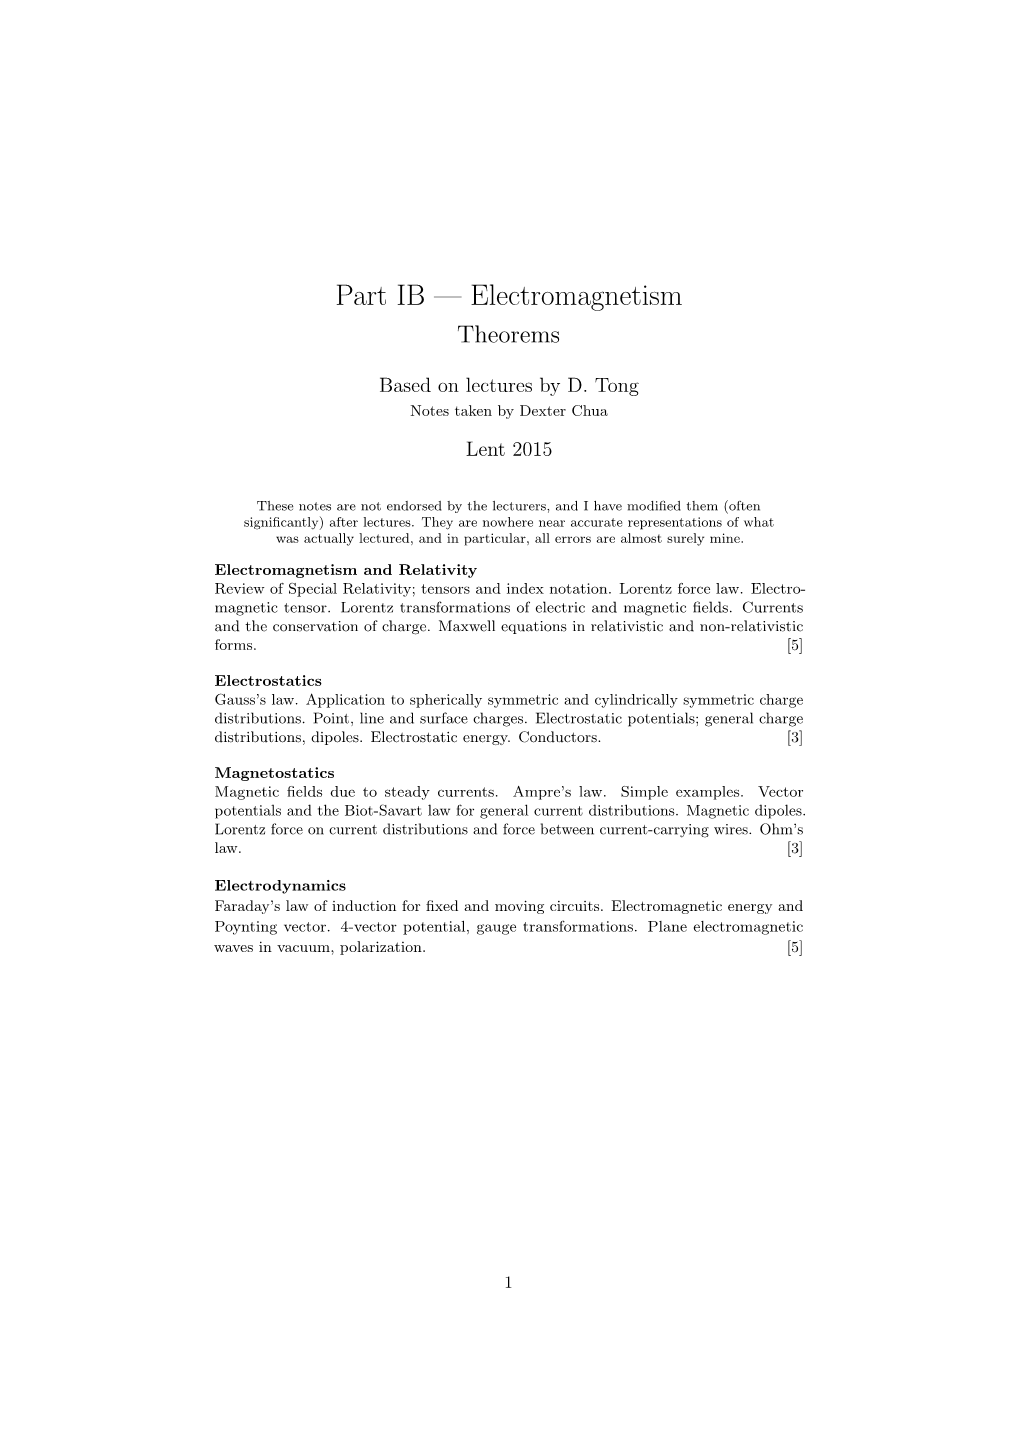 Electromagnetism Theorems